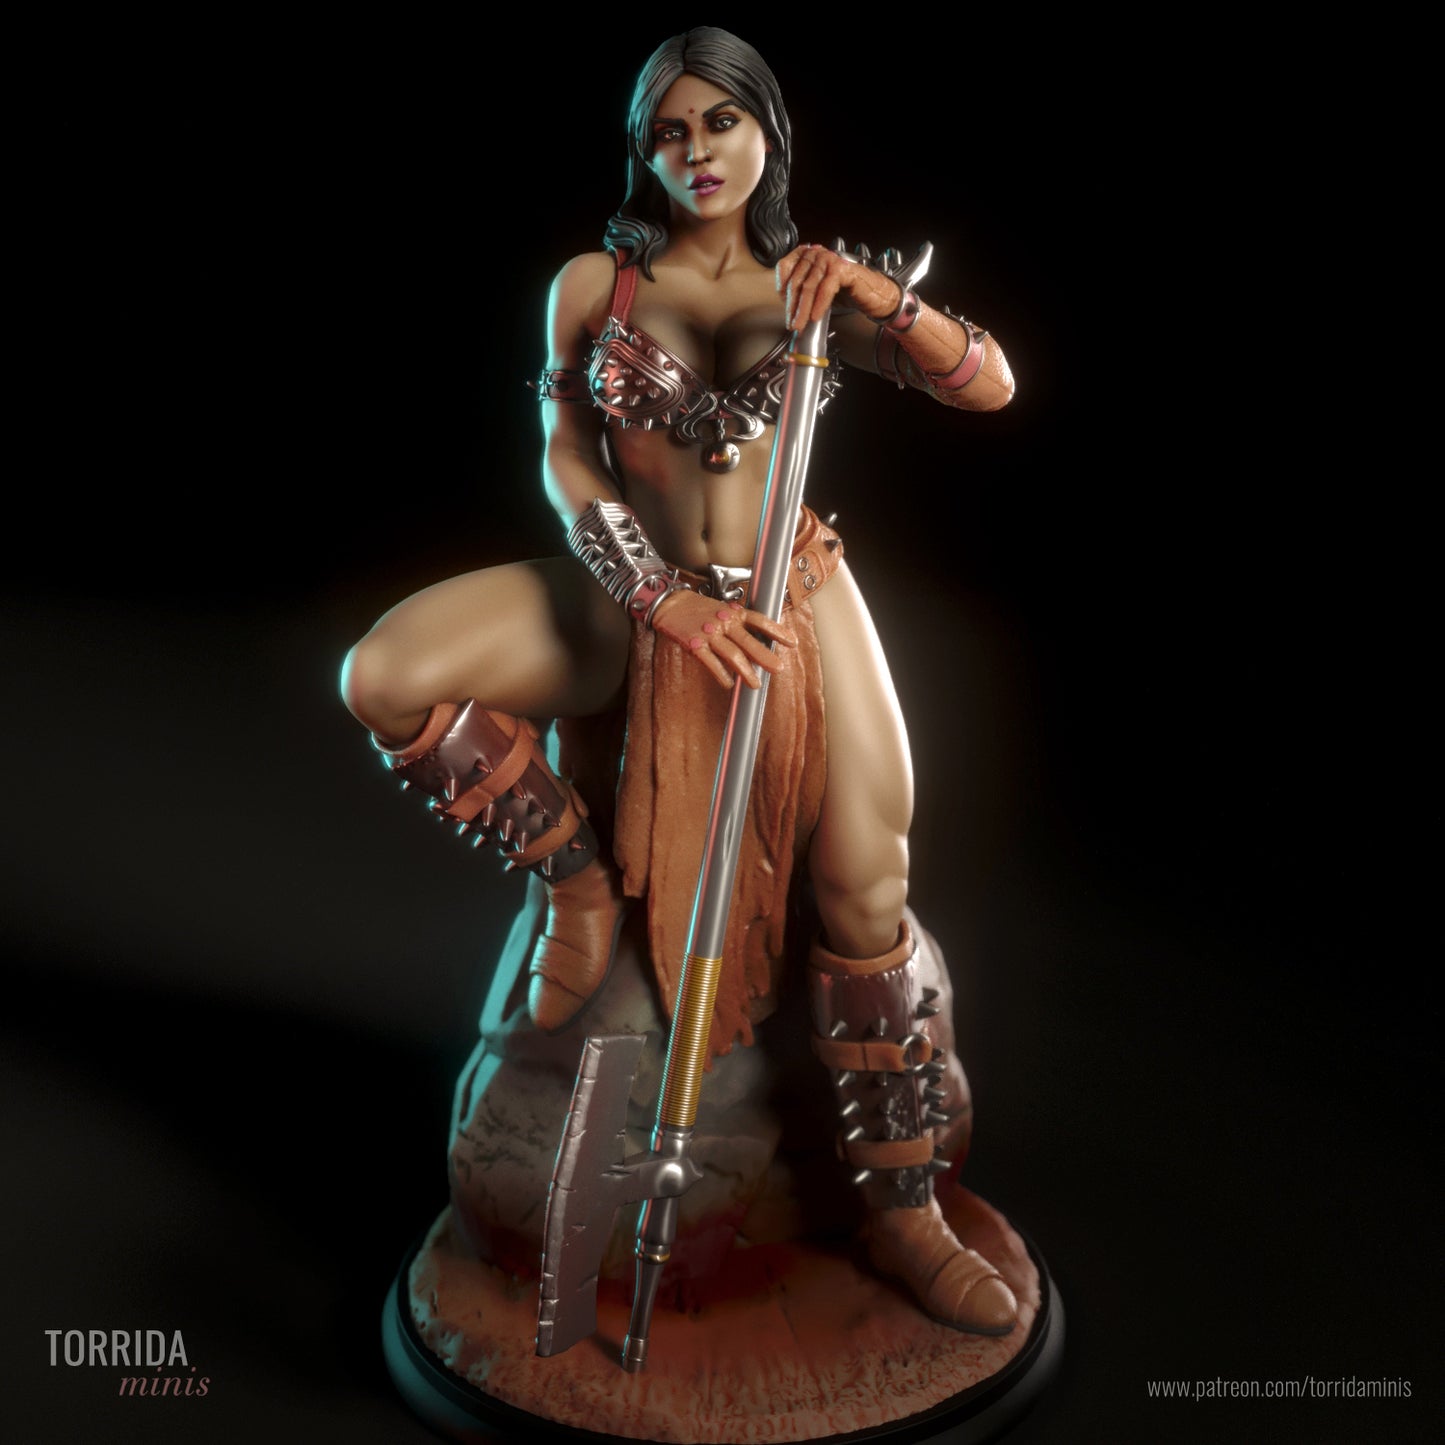 Amyra the Executioner NSFW Figurine